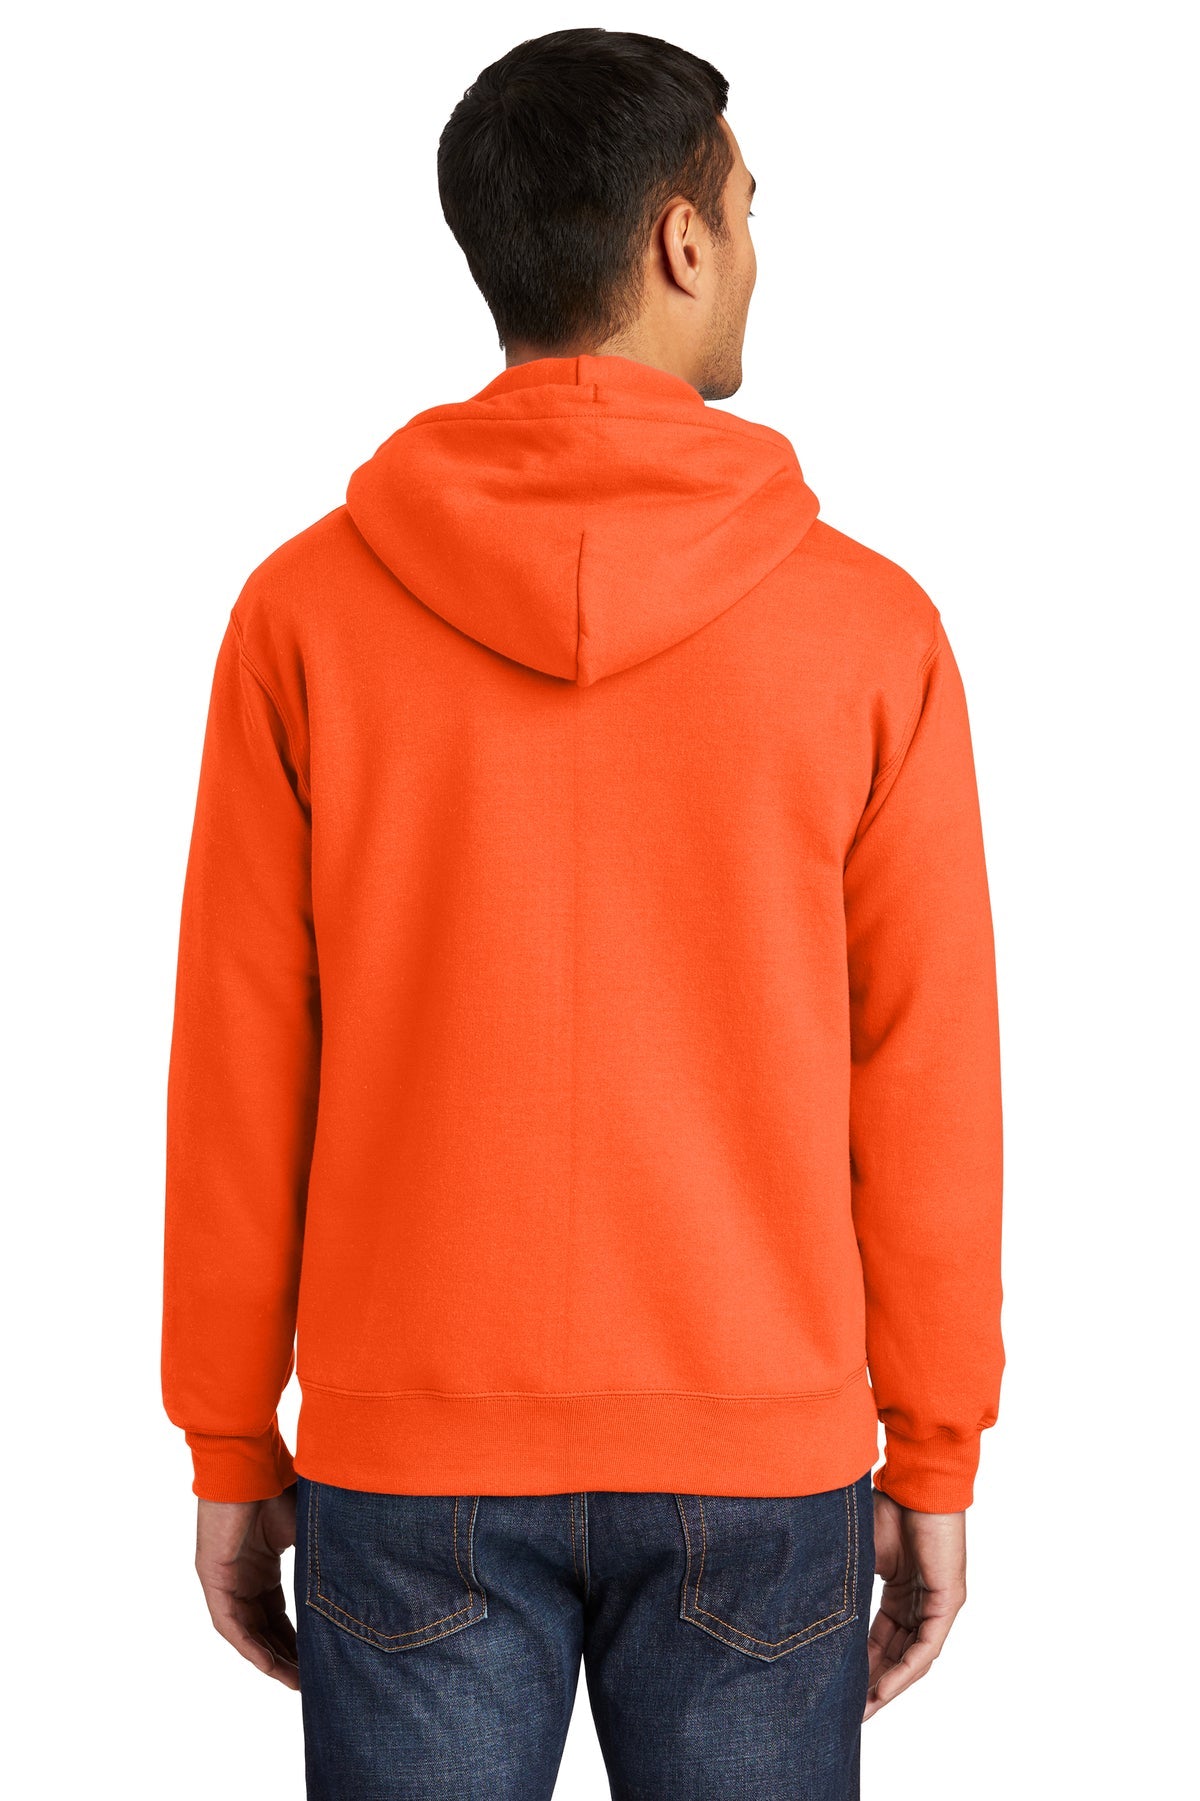 port & company_pc90zh _safety orange_company_logo_sweatshirts